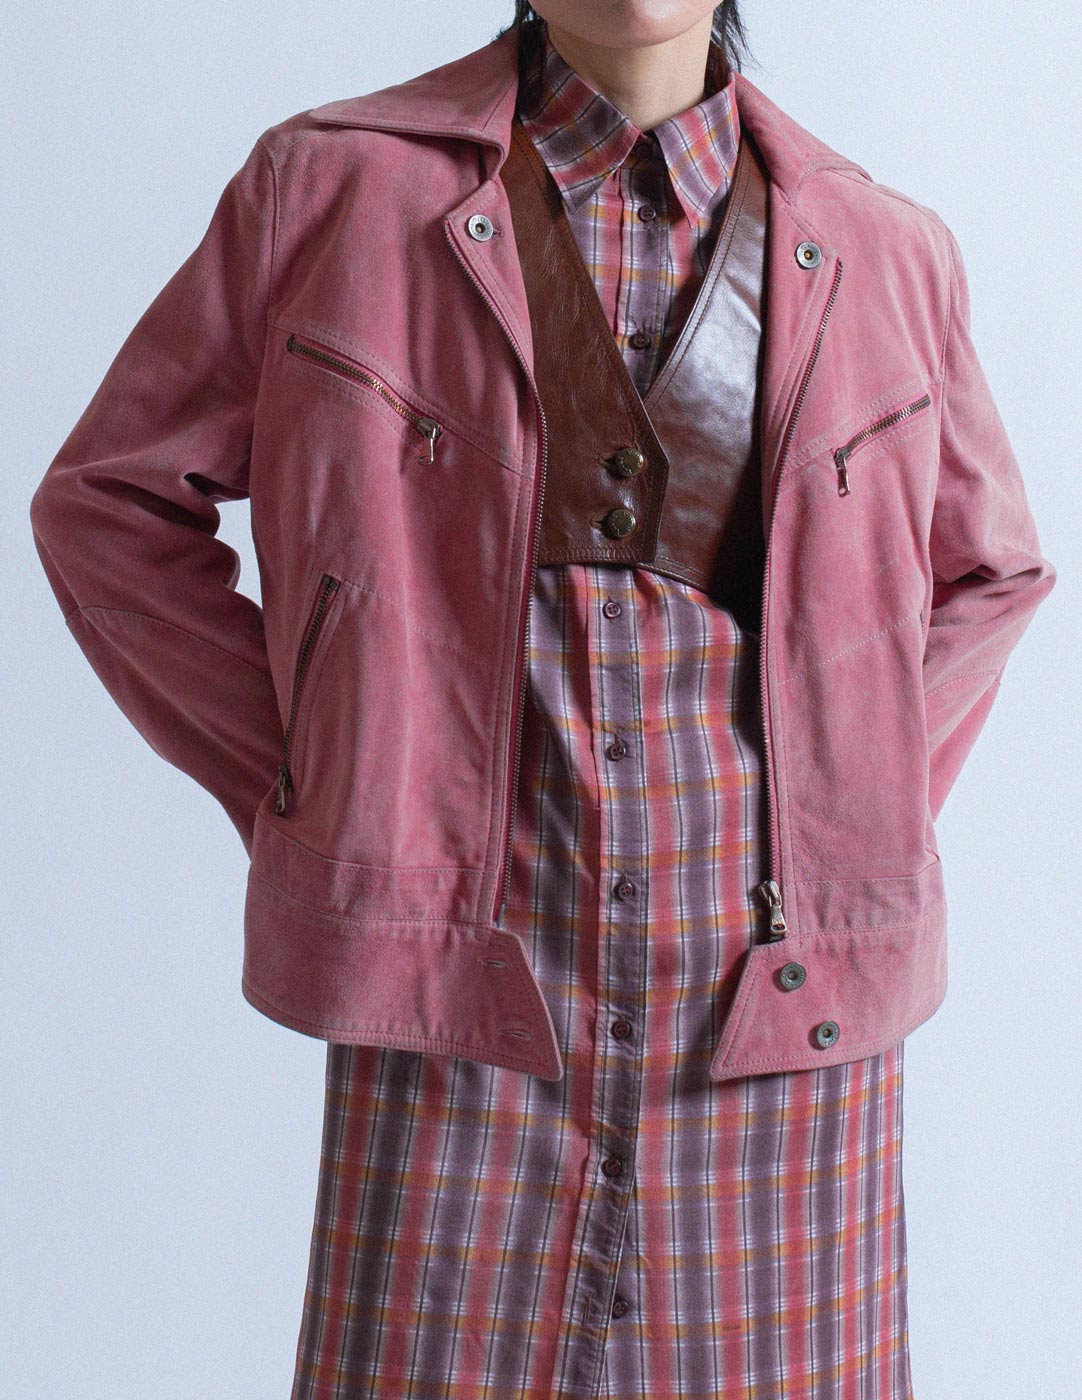 D&G pink suede moto jacket detail